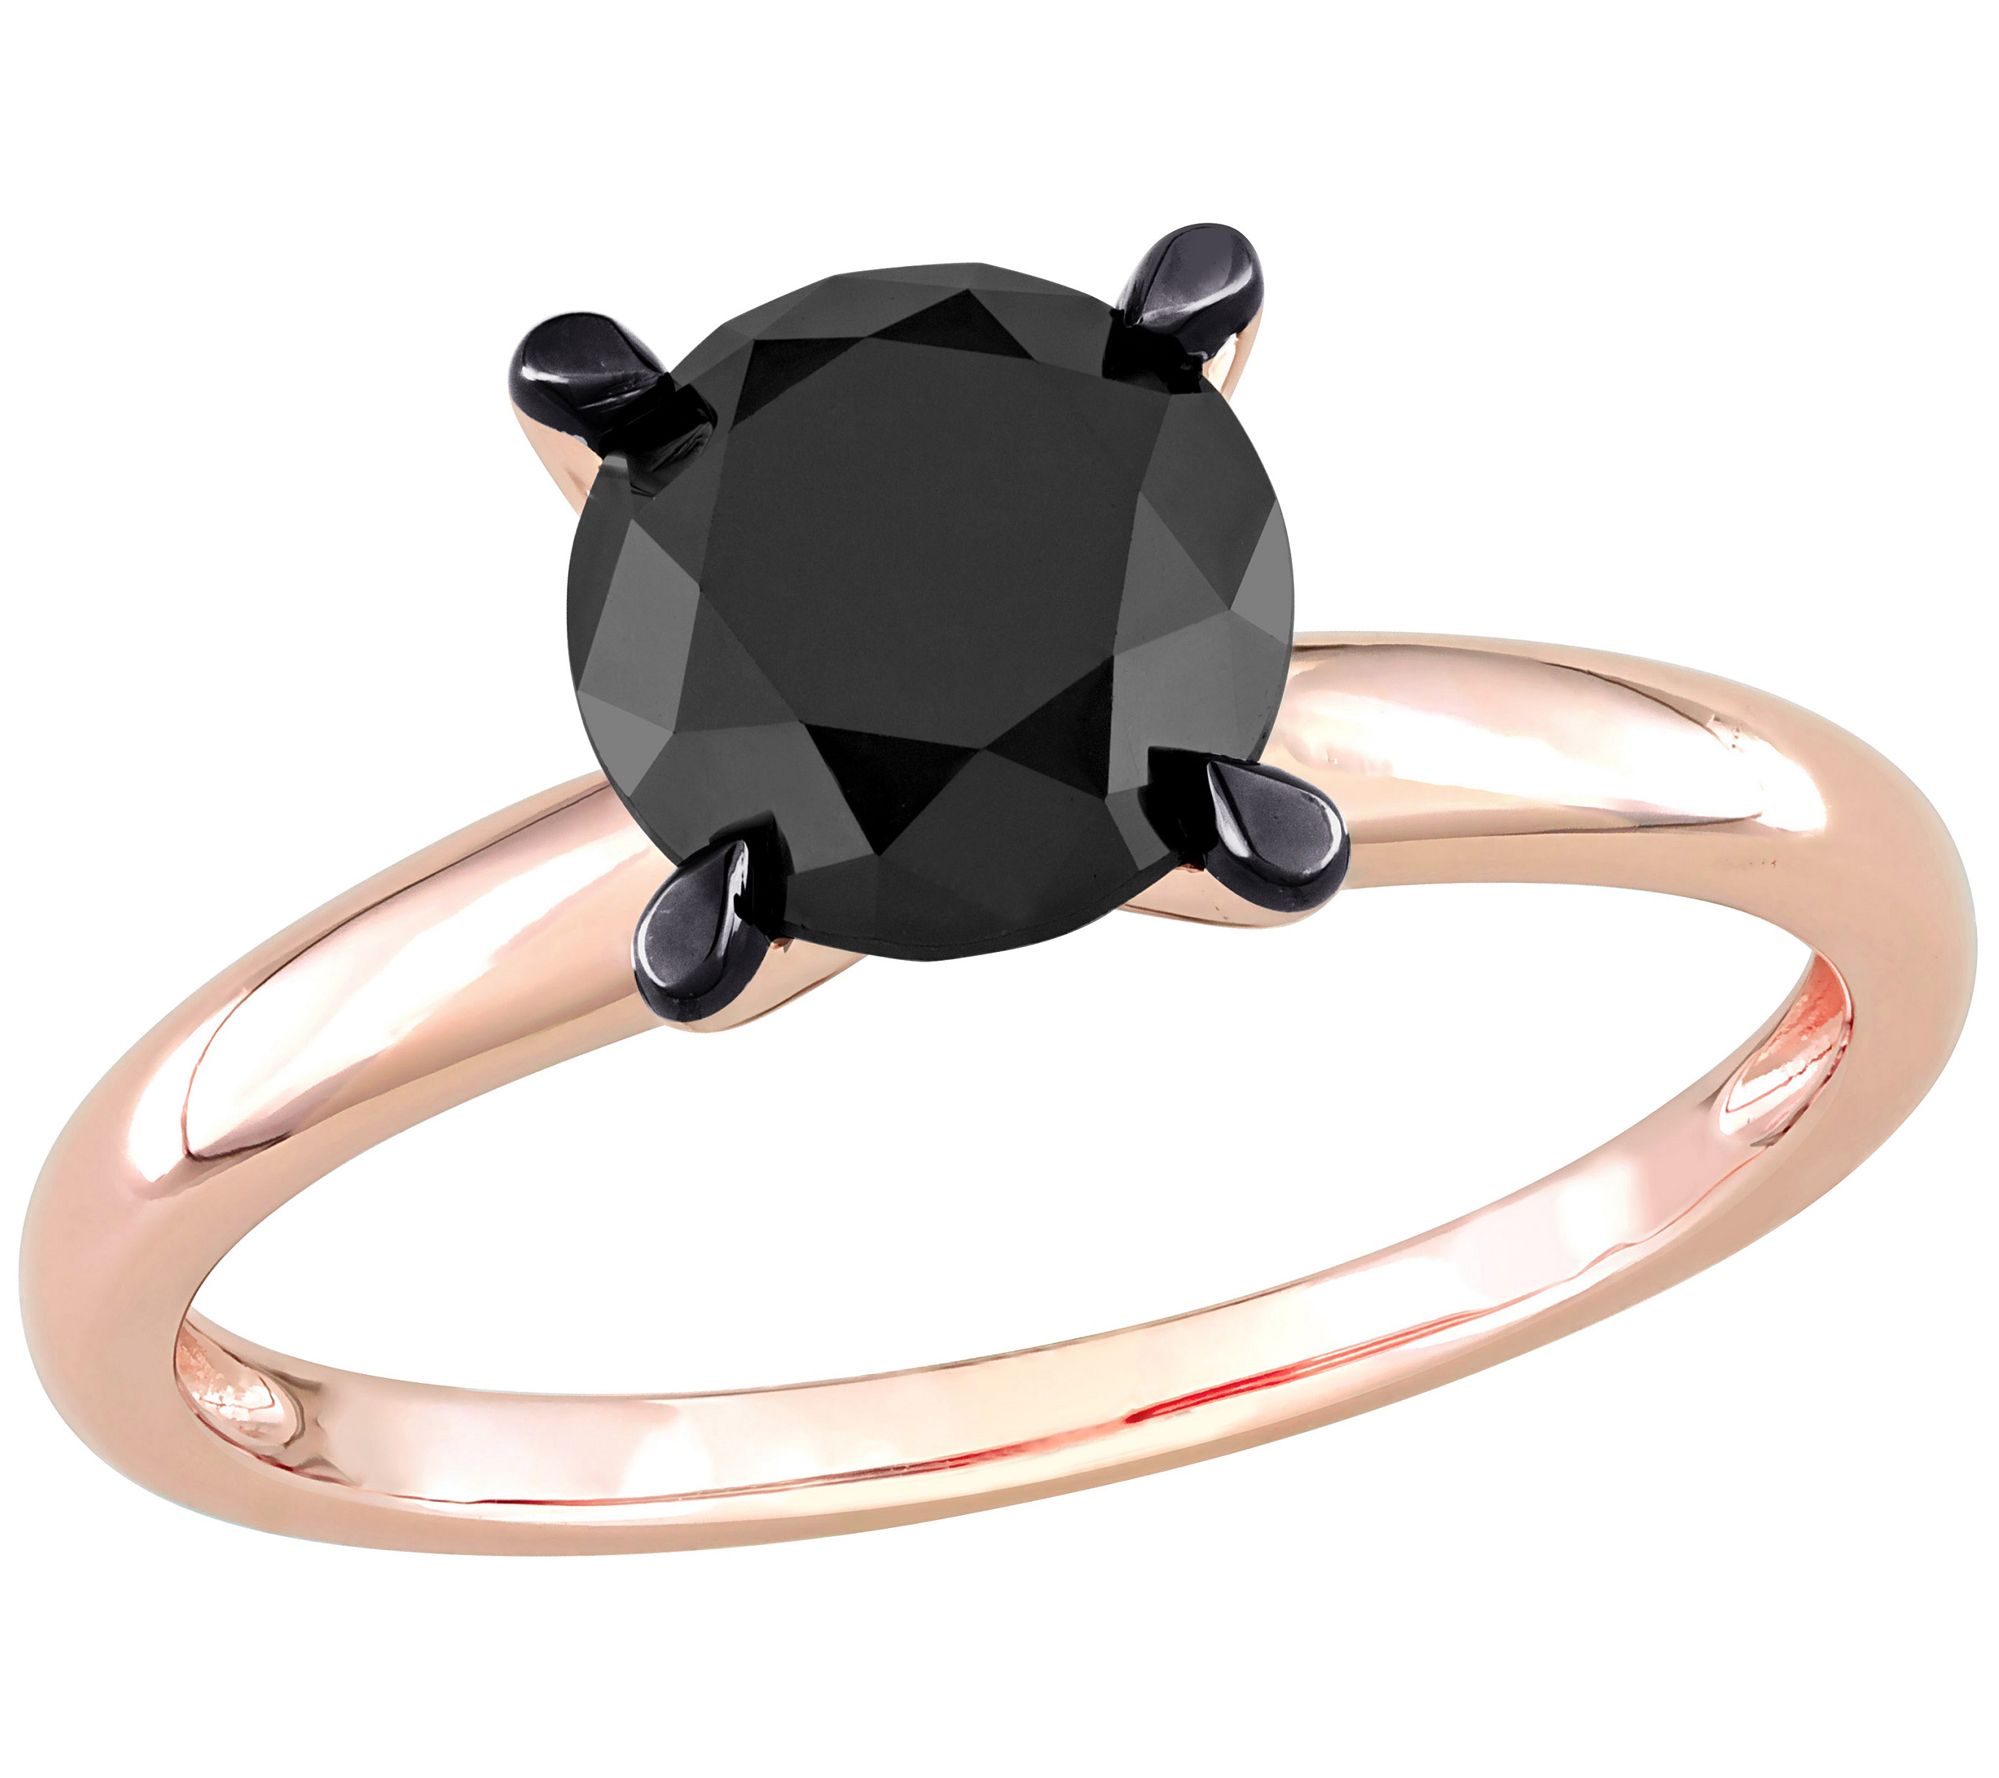 Affinity 2.00 cttw Black Diamond Solitaire Ring, 14K Rose Gold - QVC.com